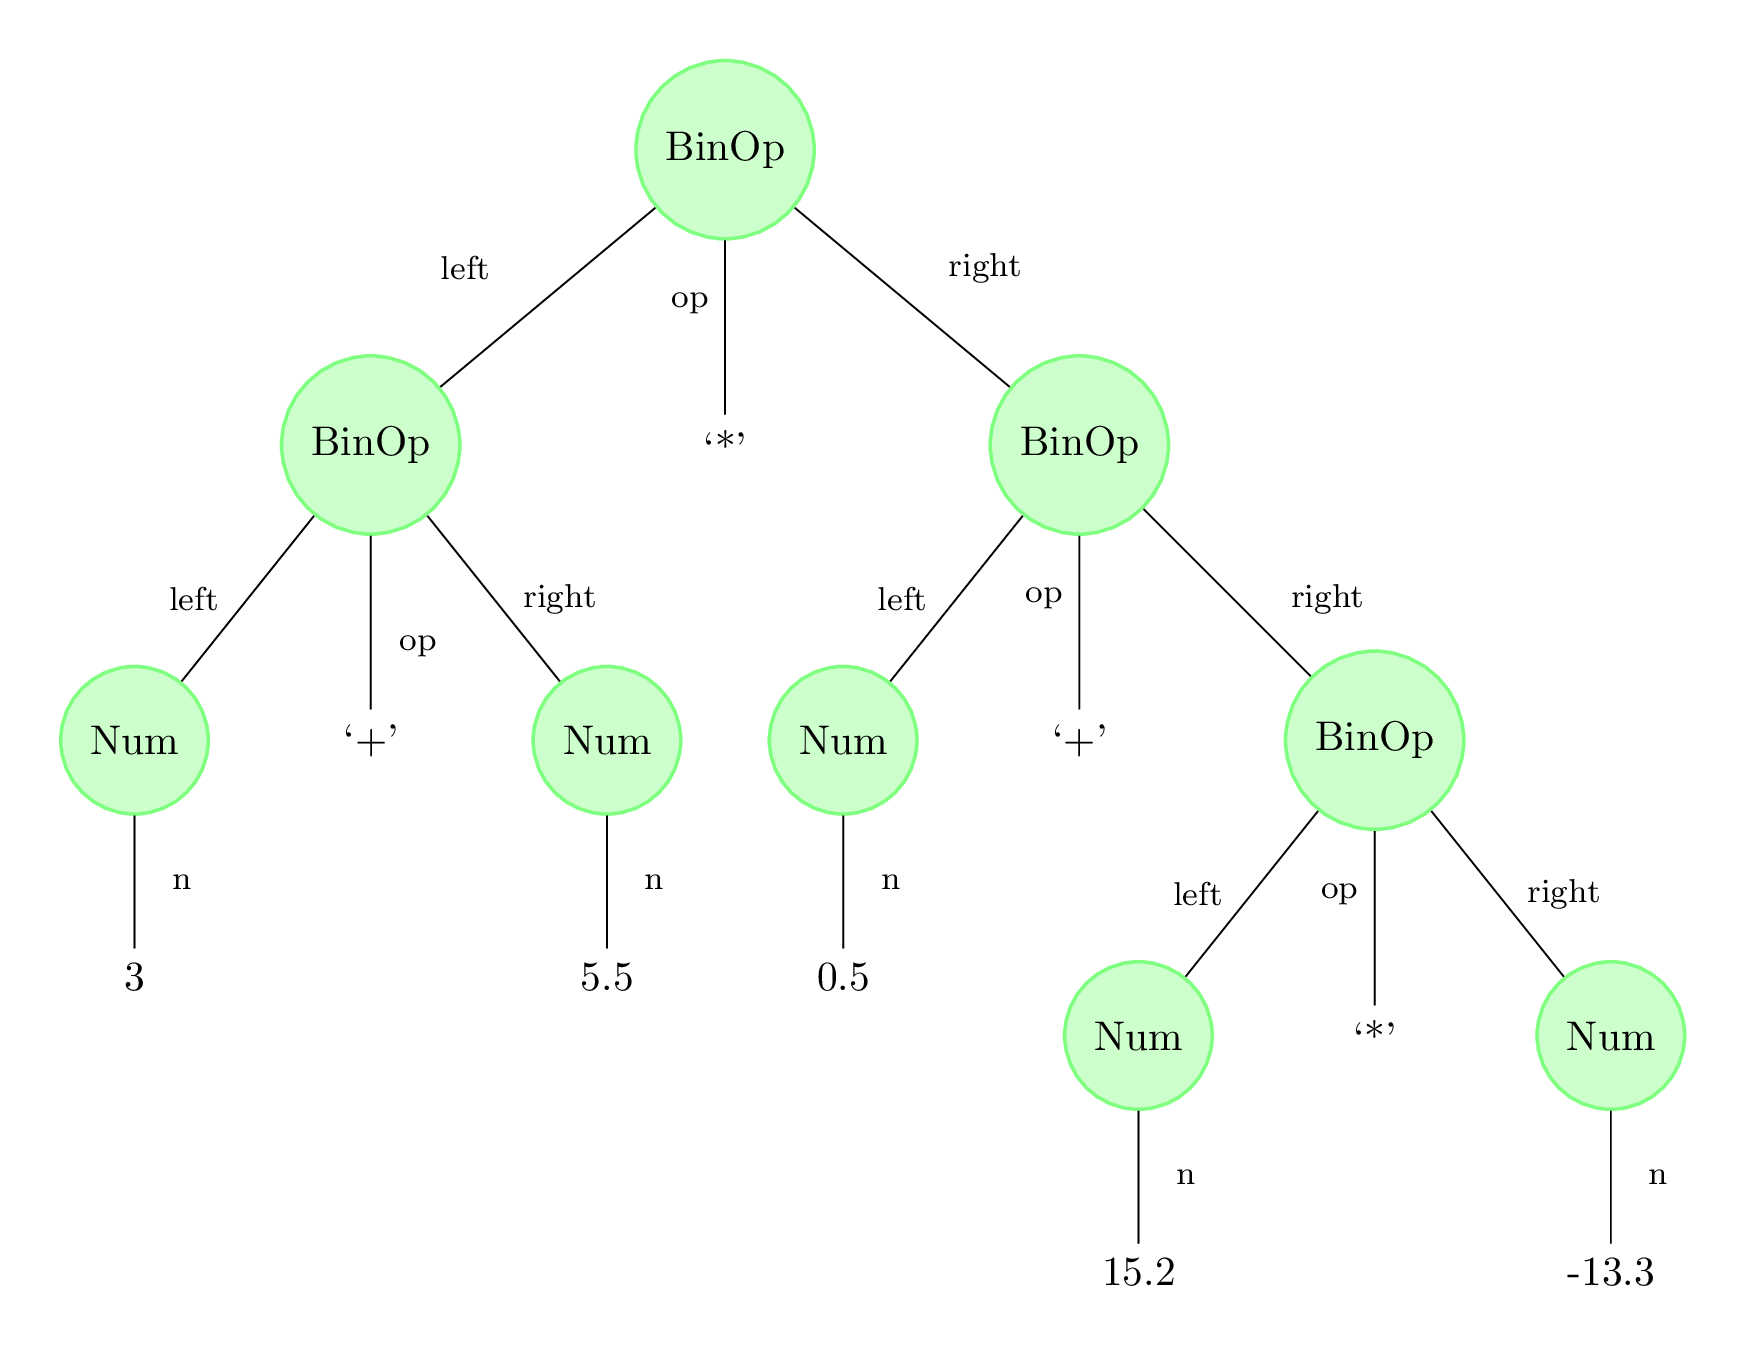 AST diagram of ((3 + 5.5) * (0.5 + (15.2 * -13.3))).